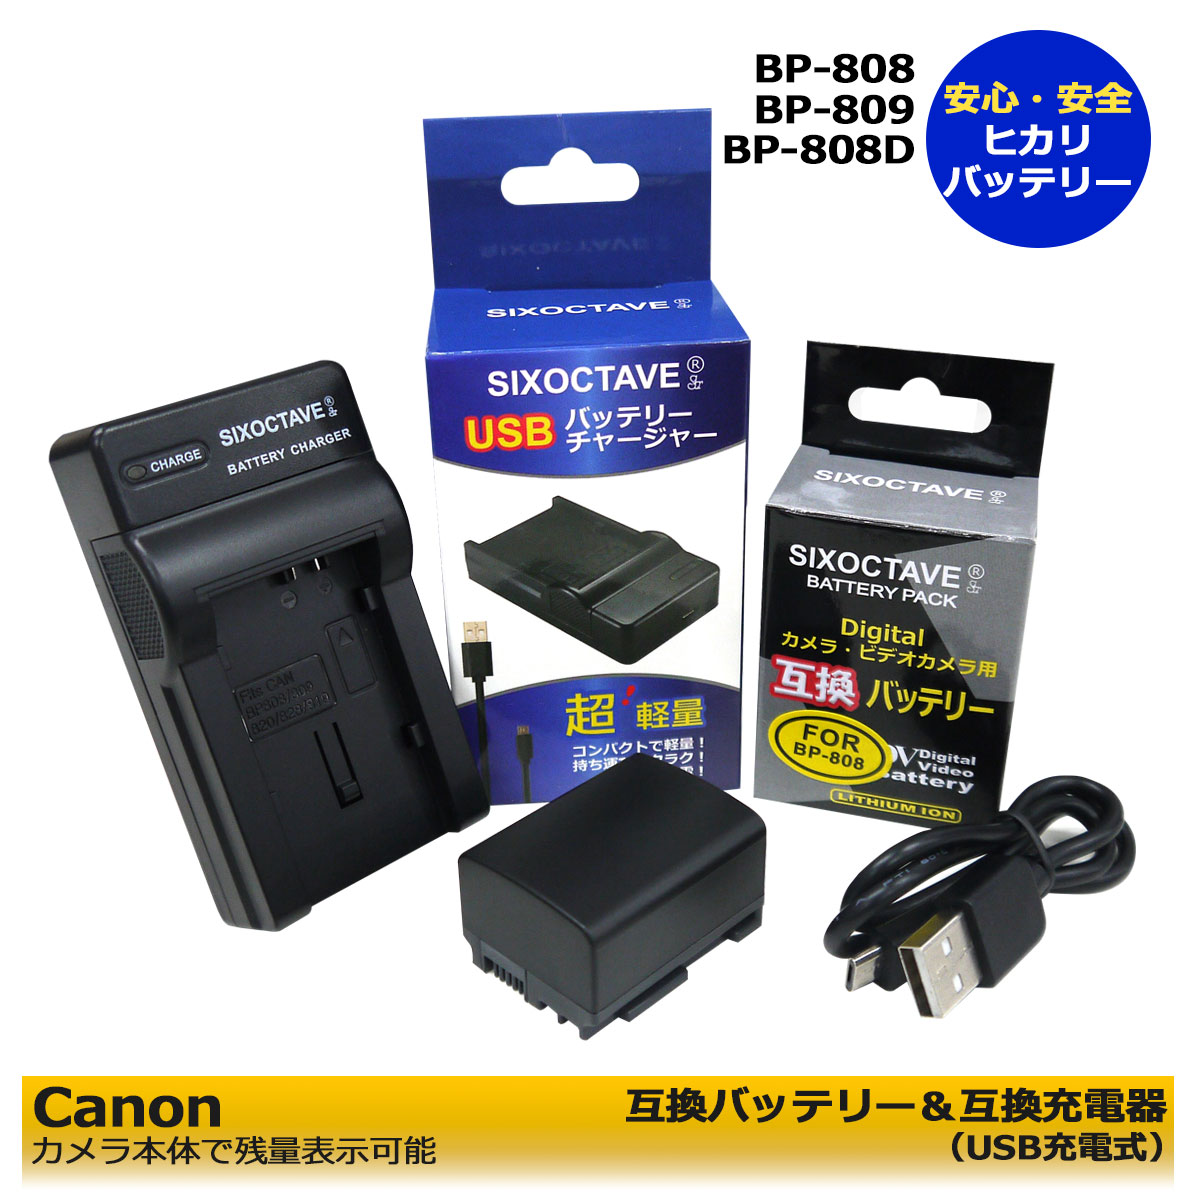 BP-808 / BP809【あす楽対応】Canon キャノン 互換バッテリー 1点と 互換USB充電器 CG-800Dの 2点セット ≪純正バッテリーも充電可能≫ iVIS HF M32 / iVIS HF M41 / iVIS HF M43 / iVIS HF S10 / iVIS HF S11 / iVIS HF S21